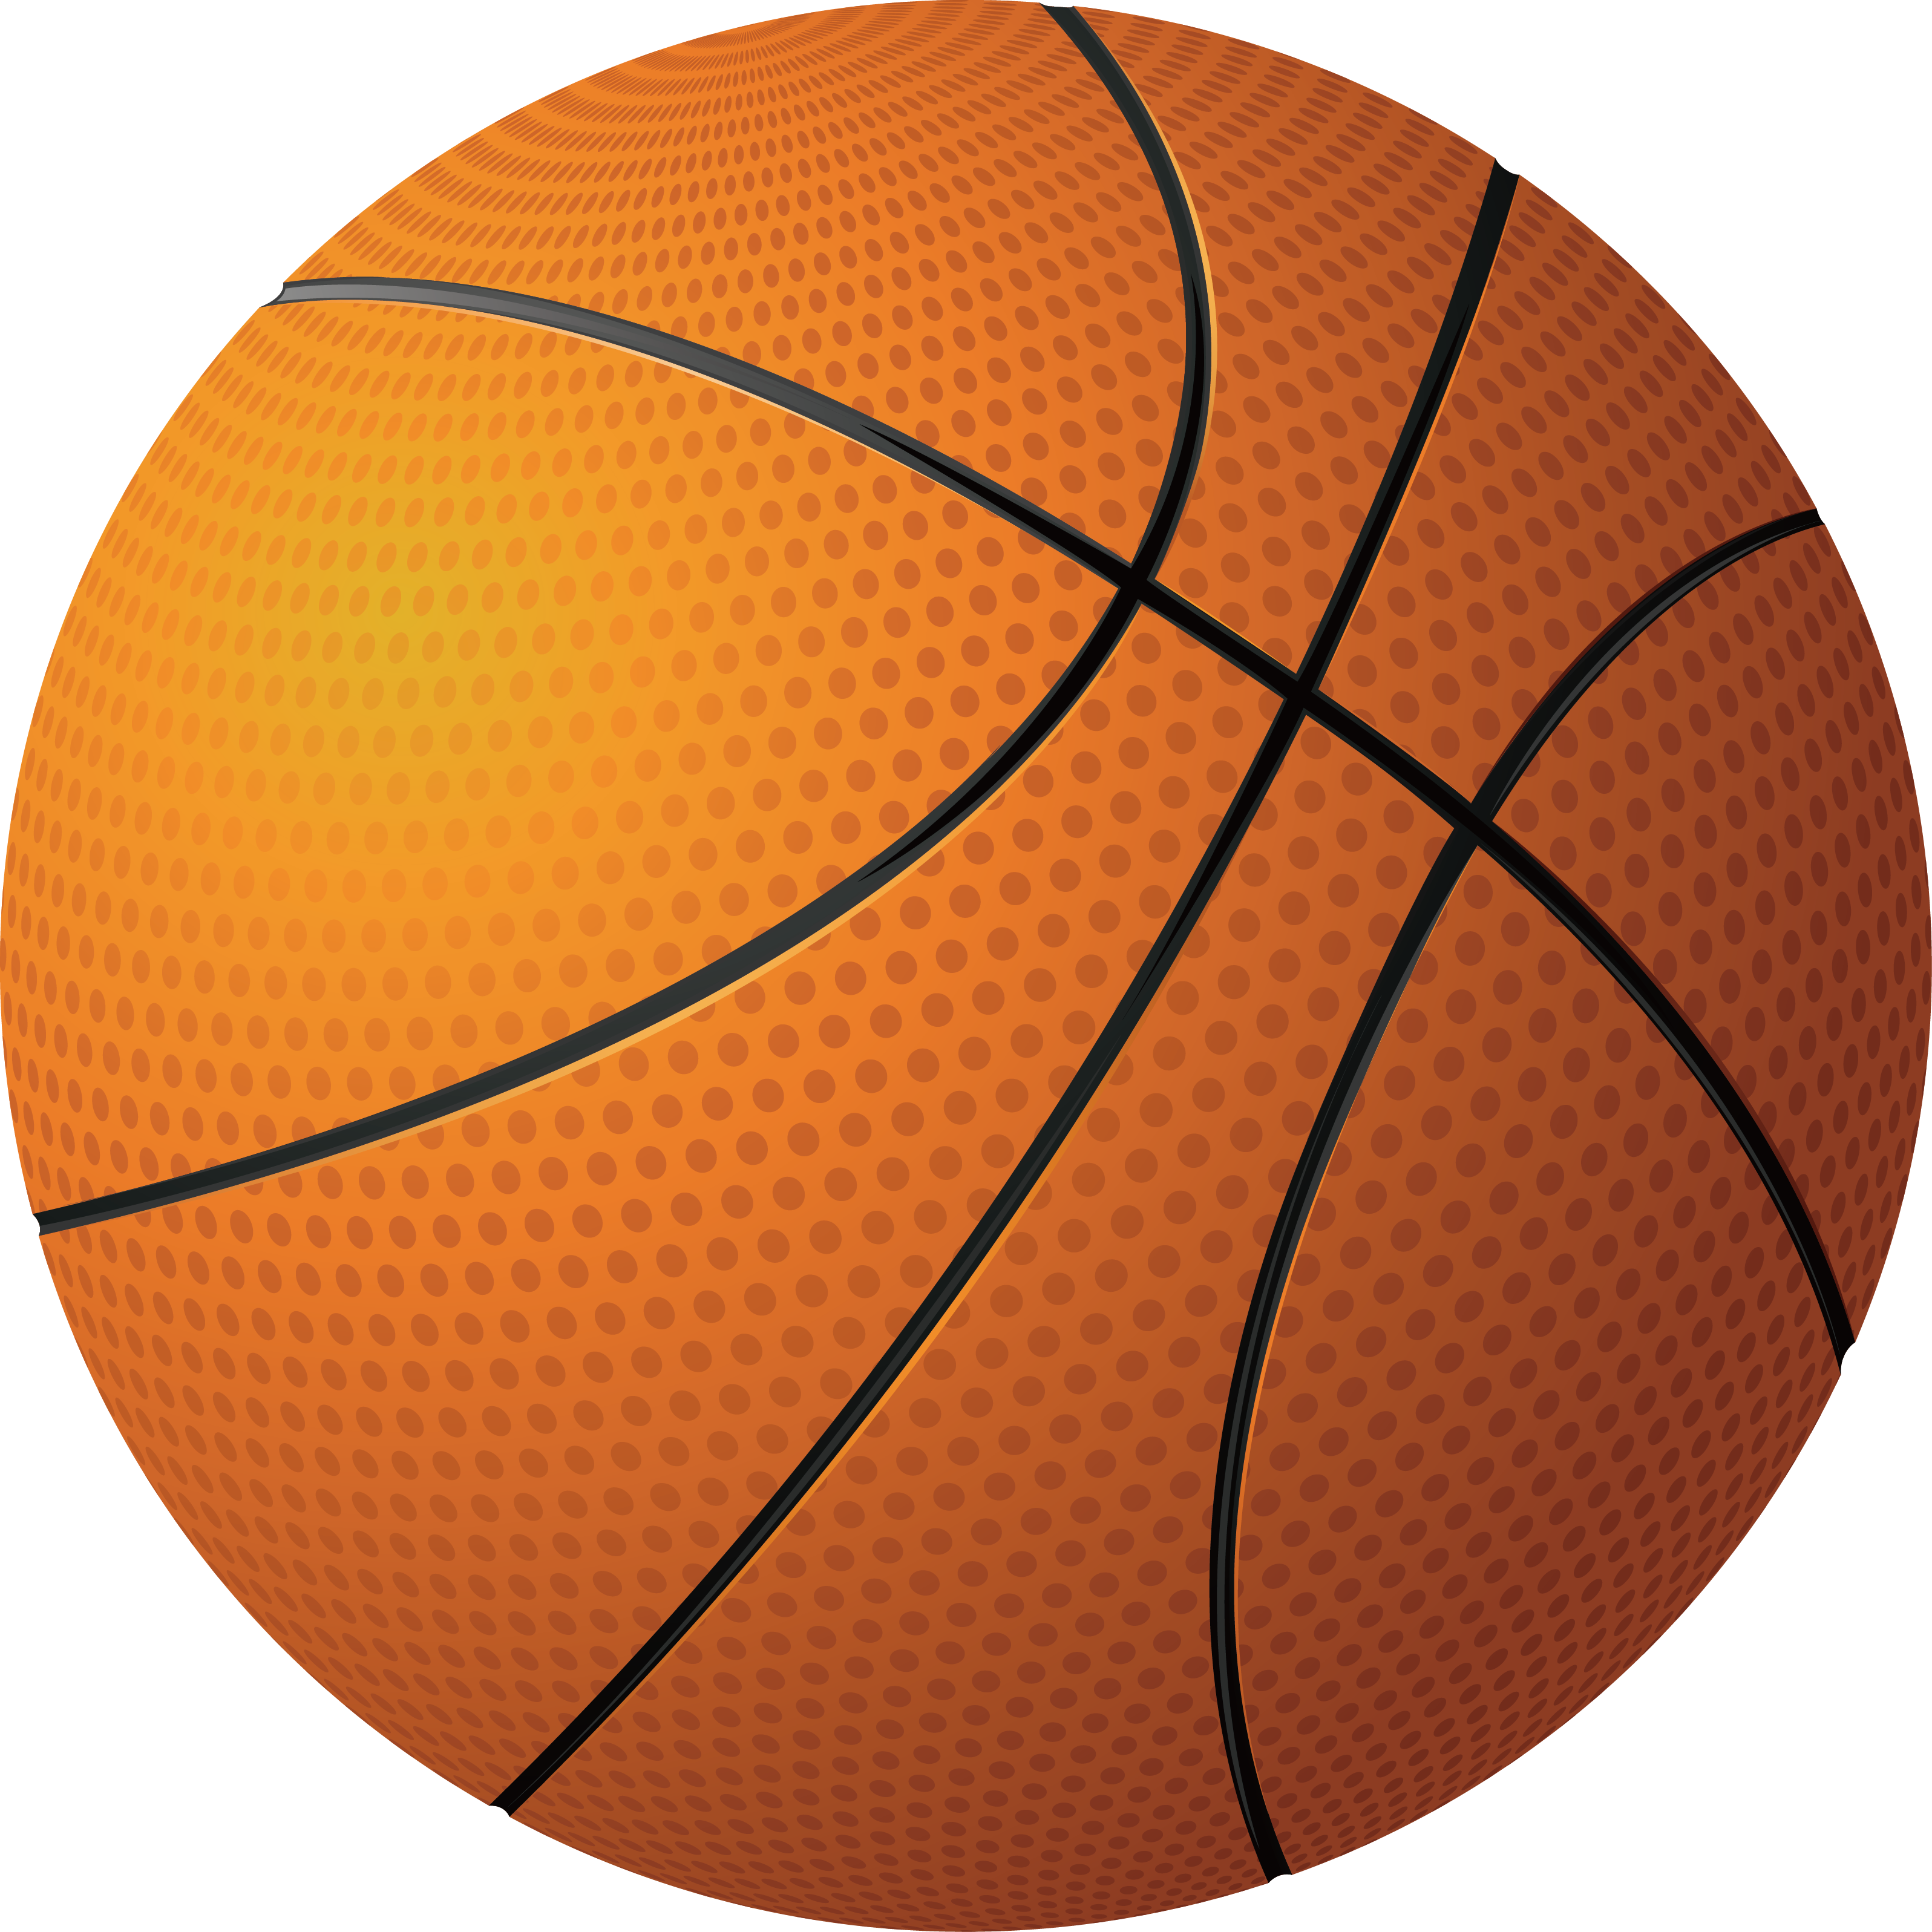 Cartoon Basketball - Cartoon basketball design png download - 3193*3193 - Free Transparent